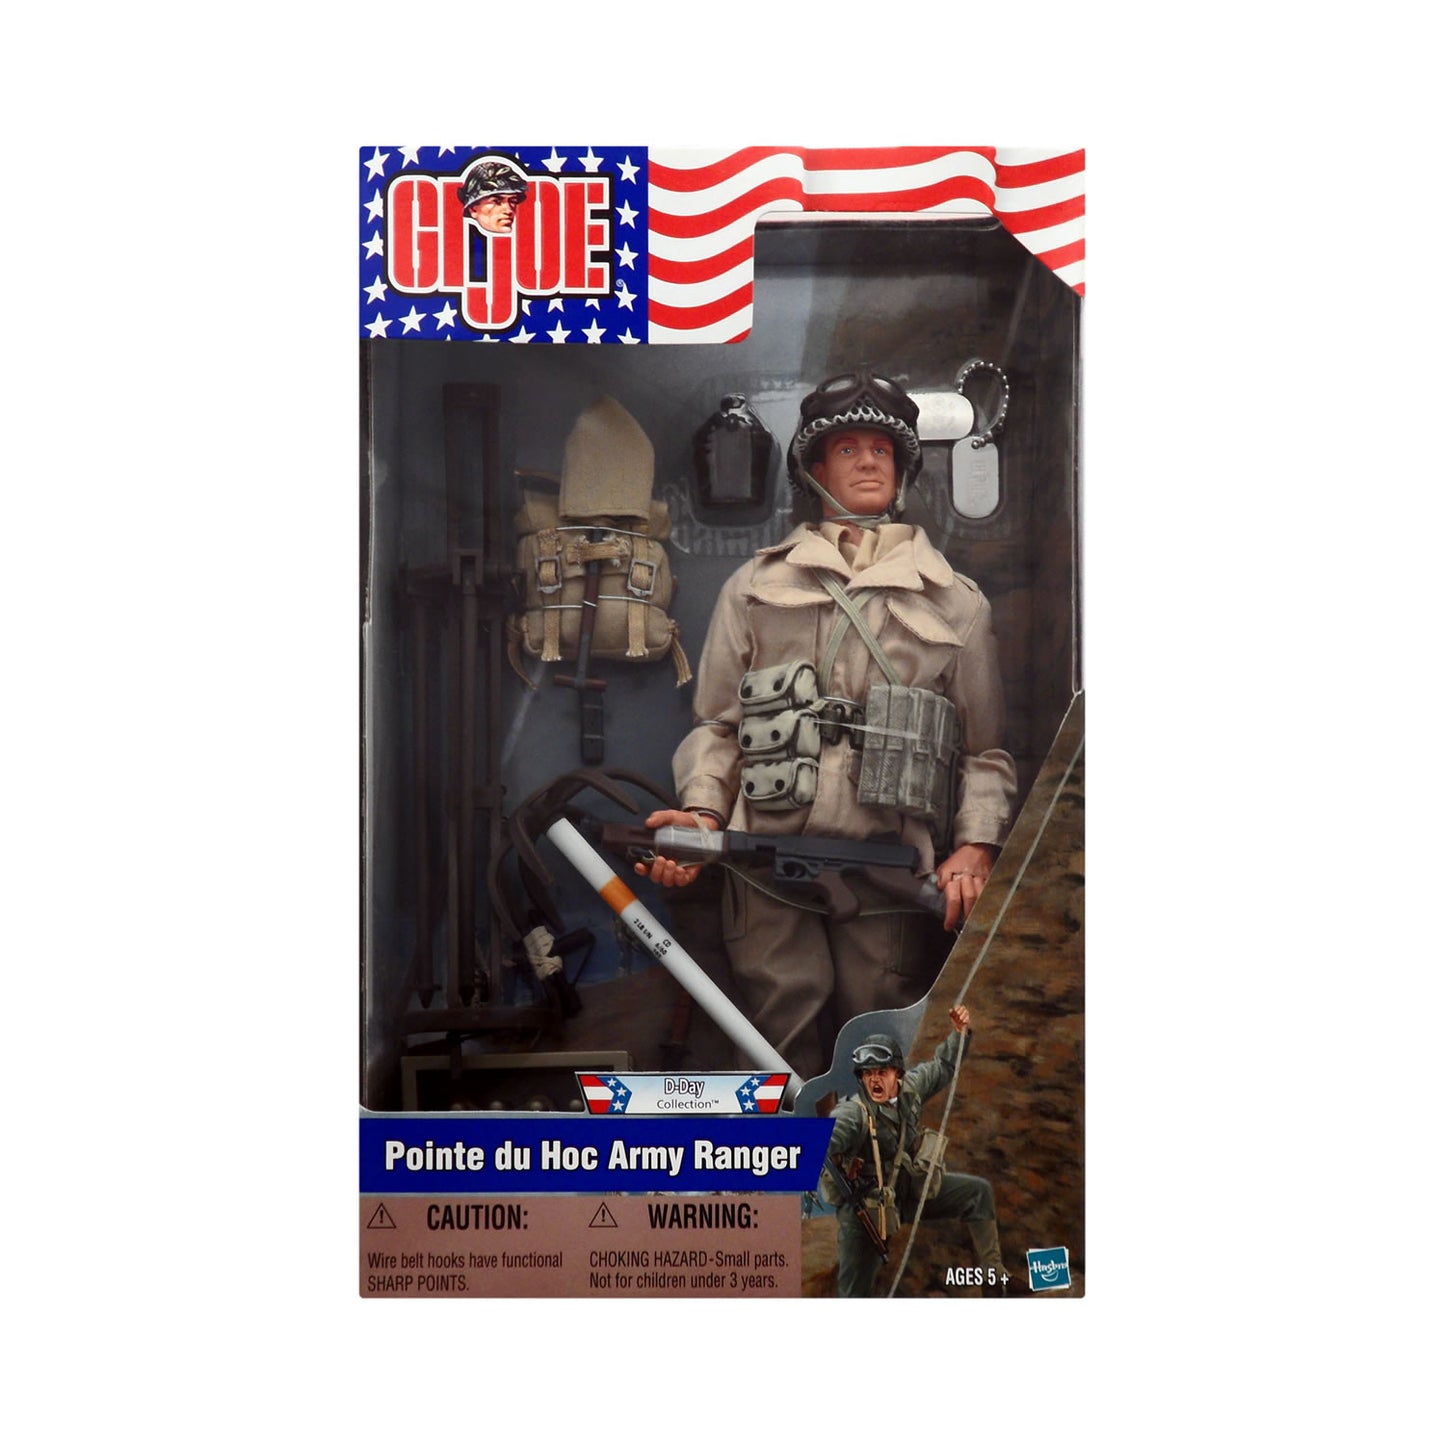 G.I. Joe Pointe du Hoc Army Ranger 12-Inch Action Figure